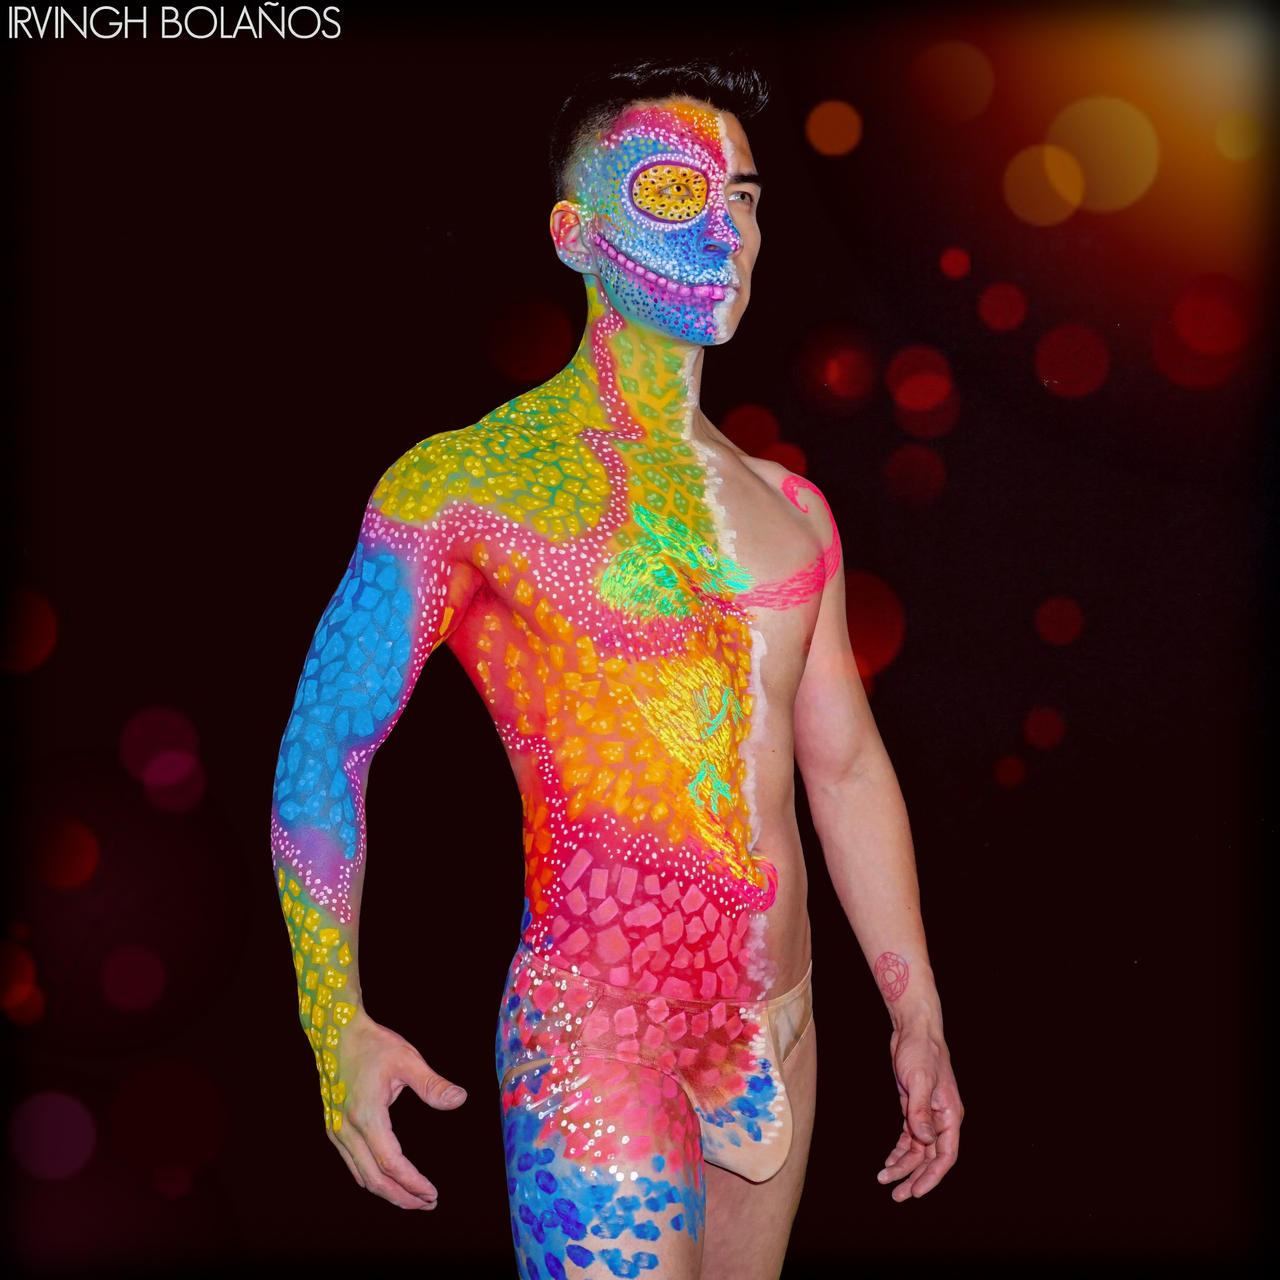 Chamaleon neon bodypaint cosplay irvinghbolanos by irvinghbolanos